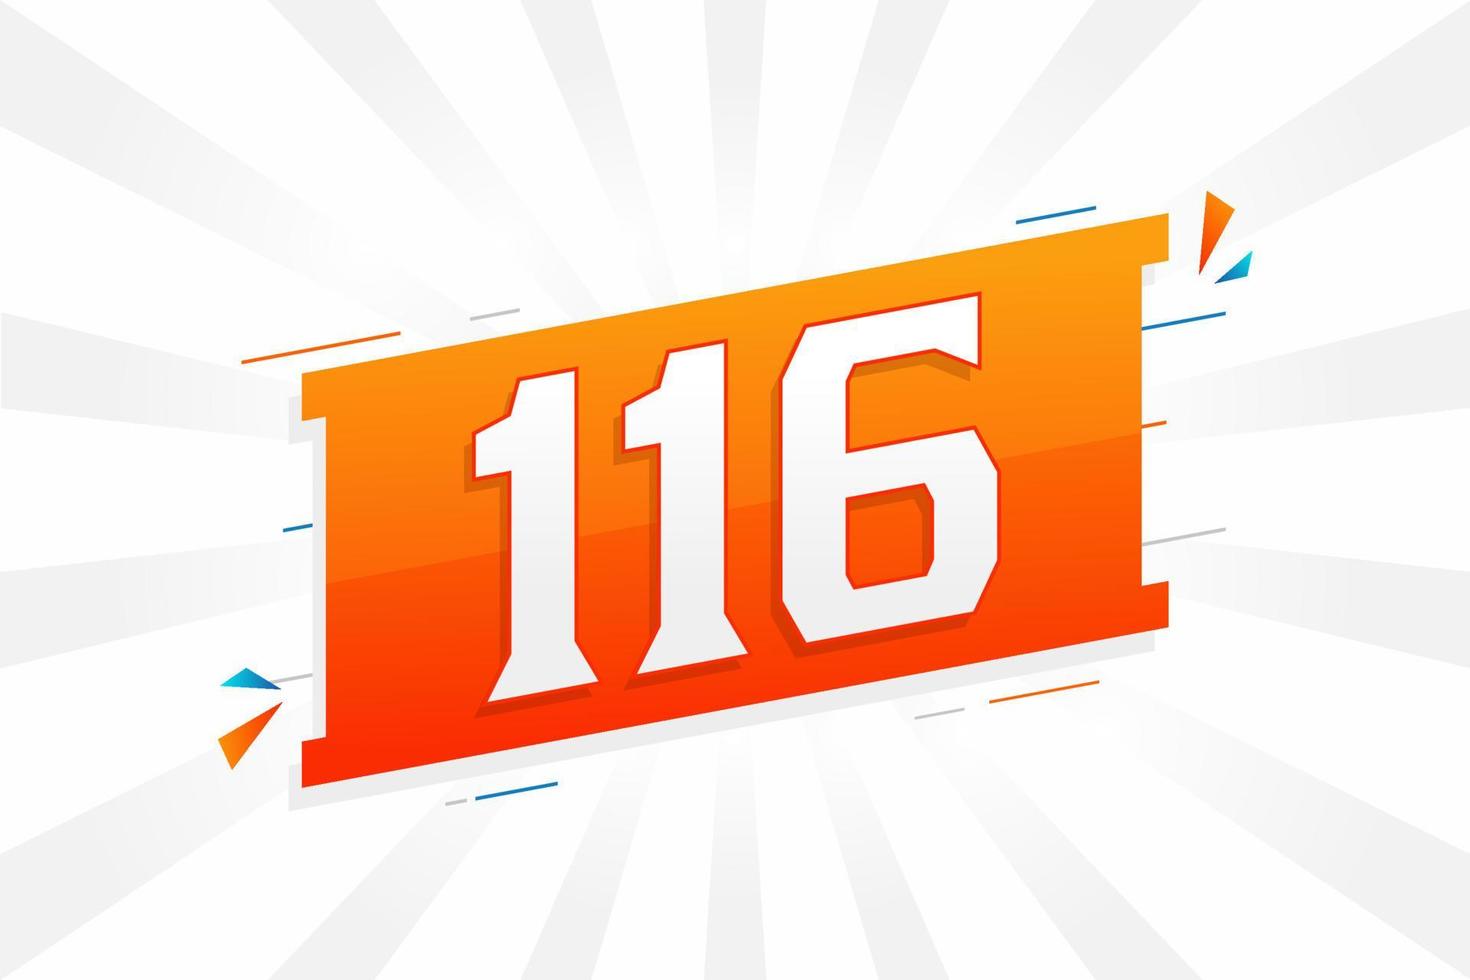 116 Zahlenvektor-Schriftalphabet. Nummer 116 mit dekorativem Elementvorratvektor vektor